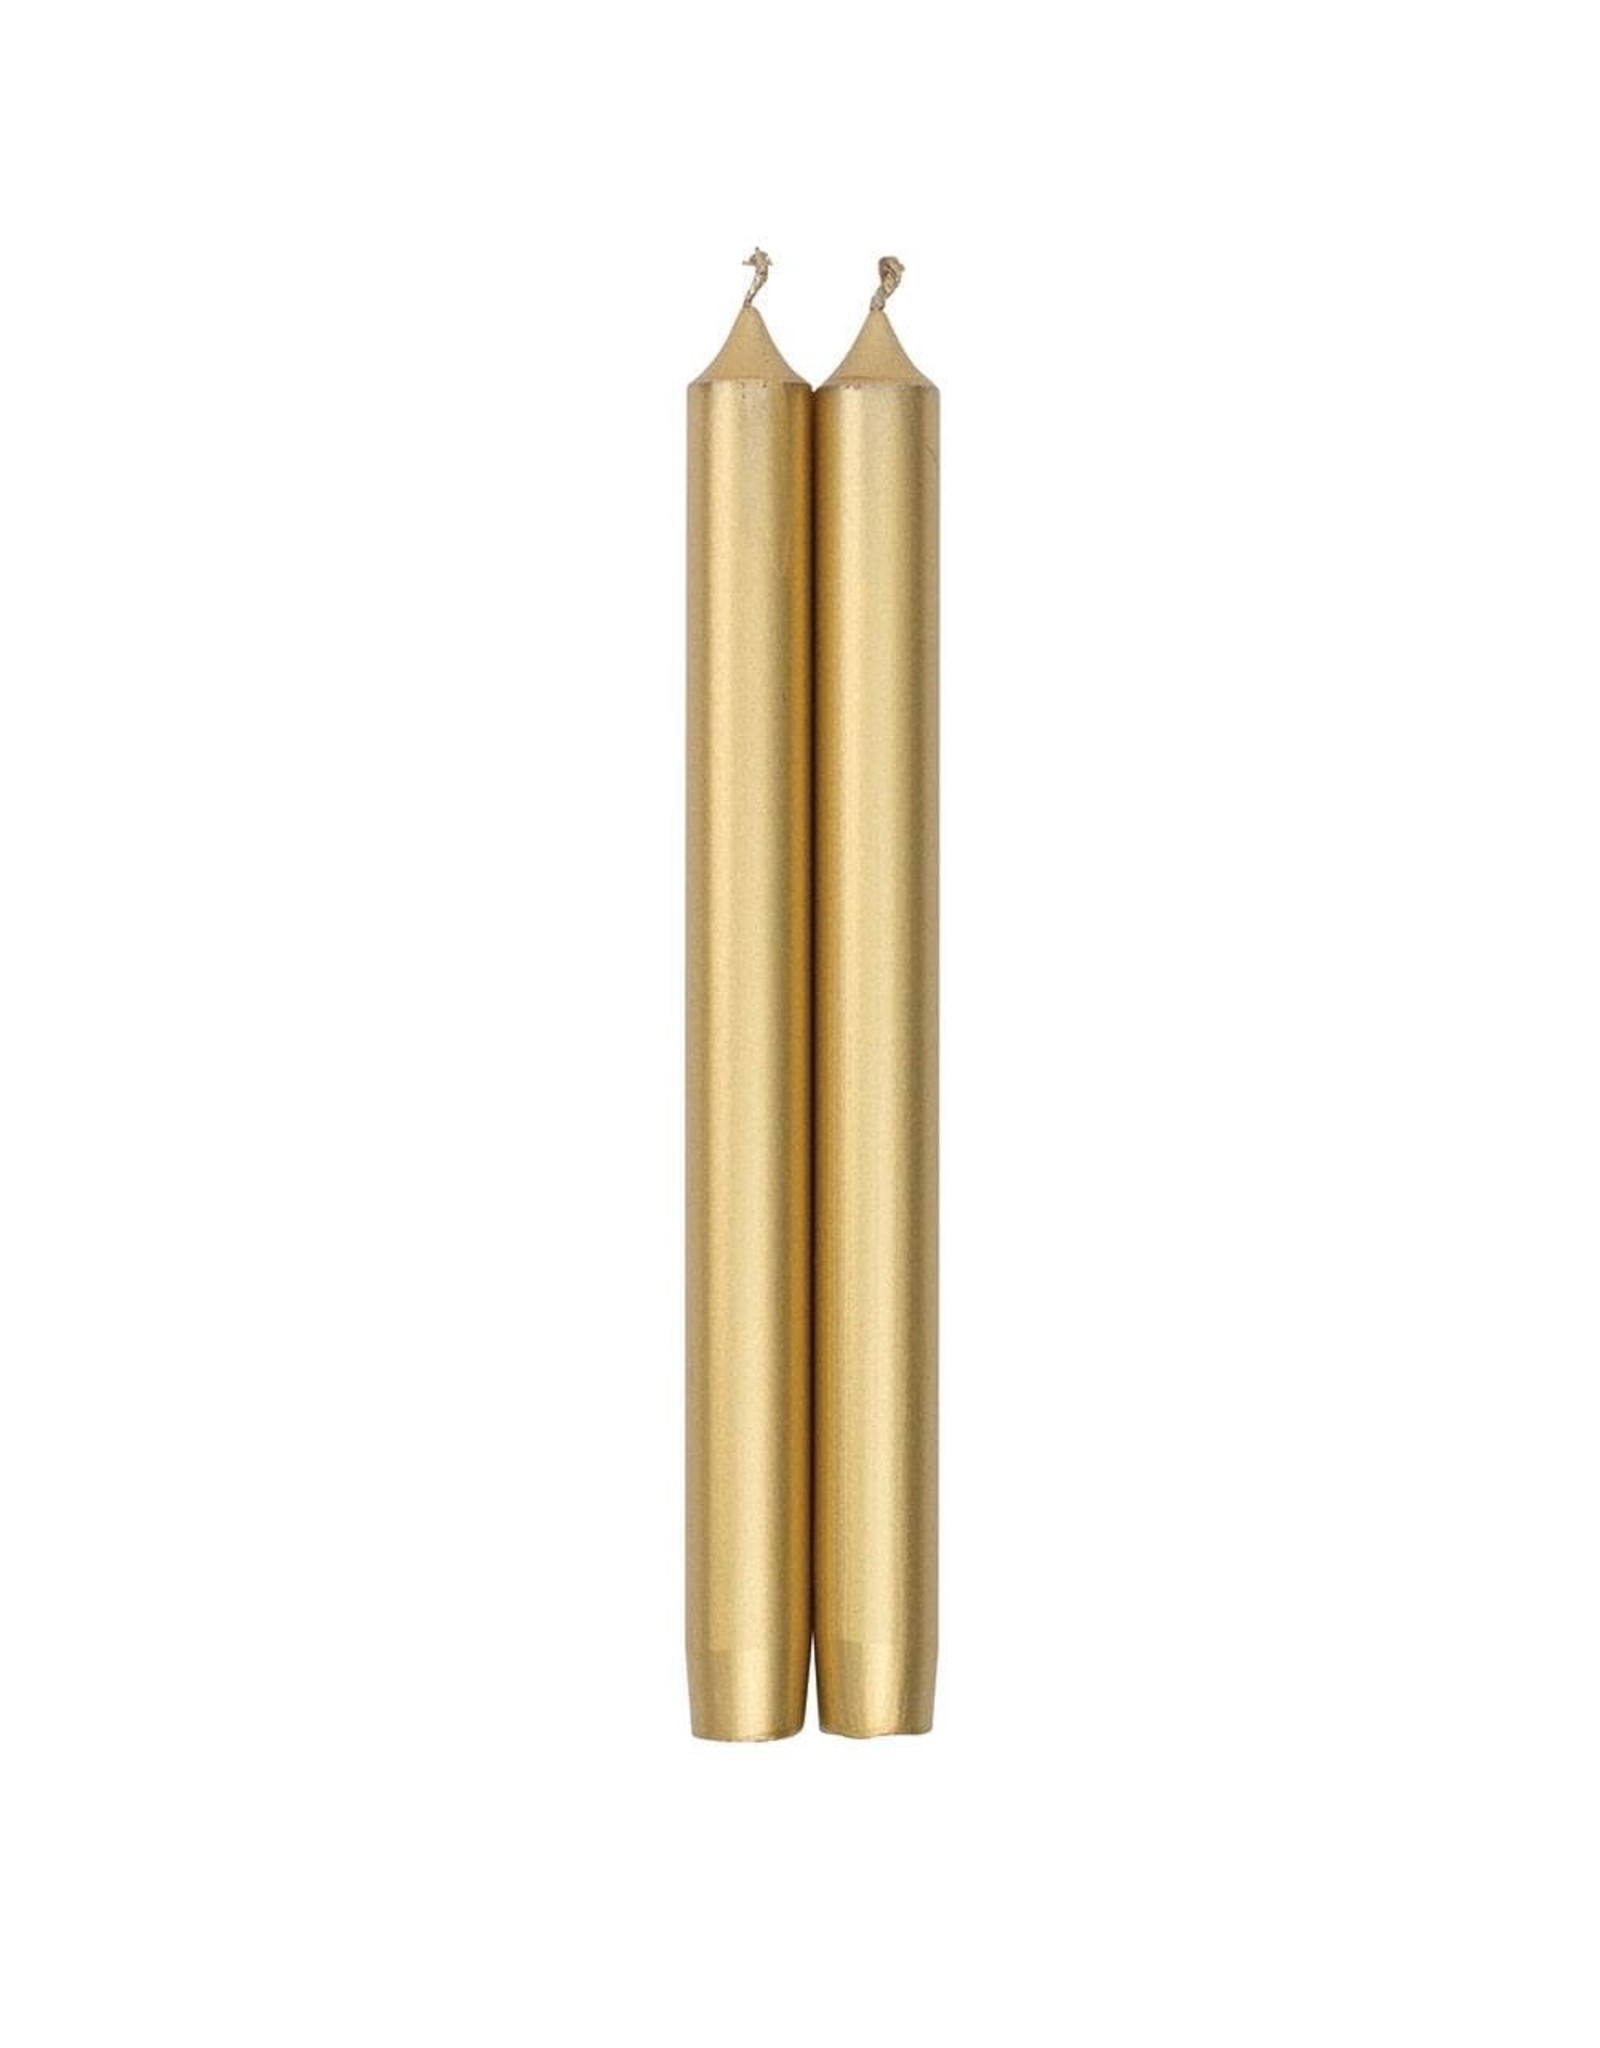 Caspari Crown Candles Tapers 12 inch 2pk In Metallic Gold